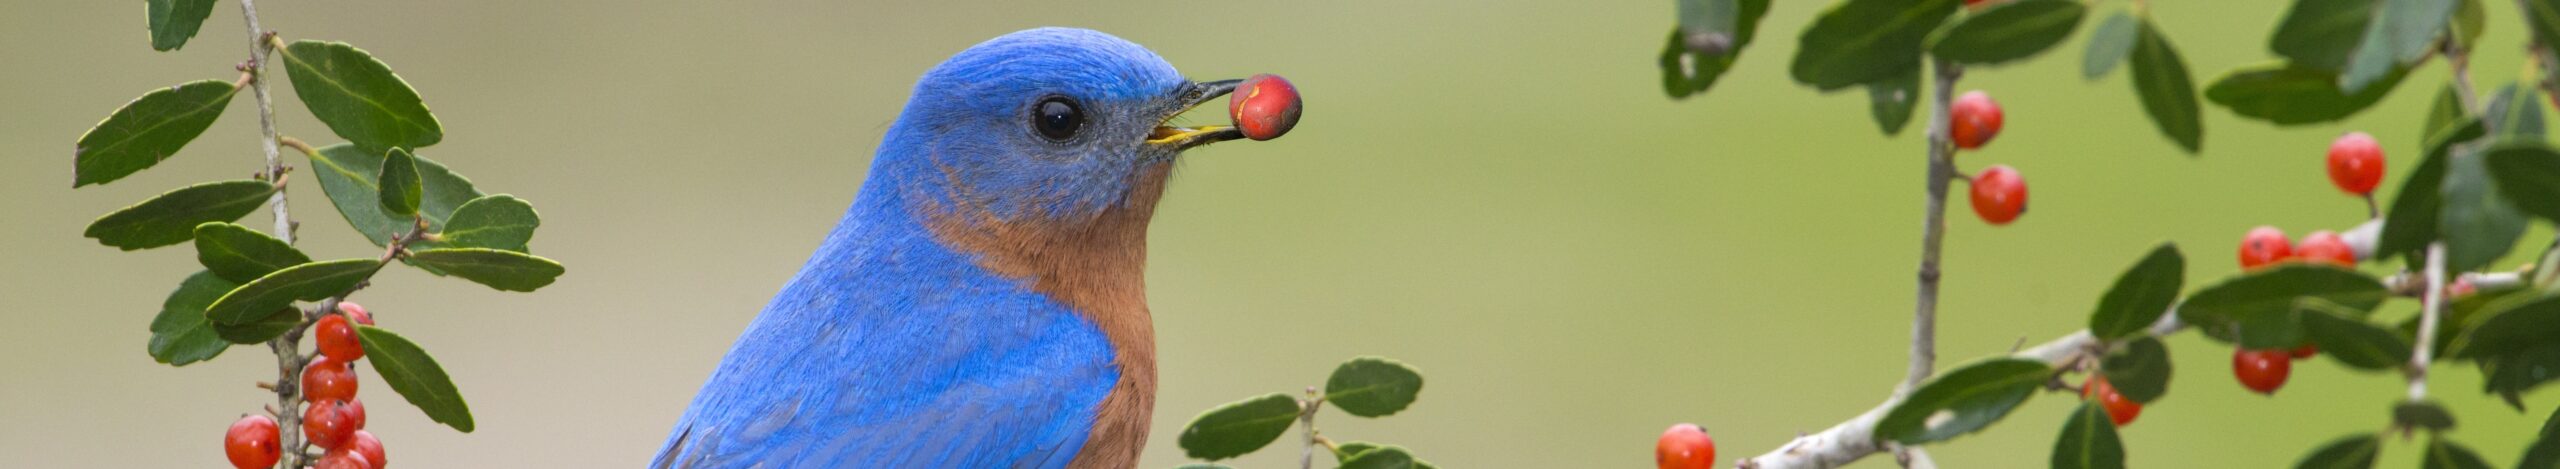 Bluebird with berry